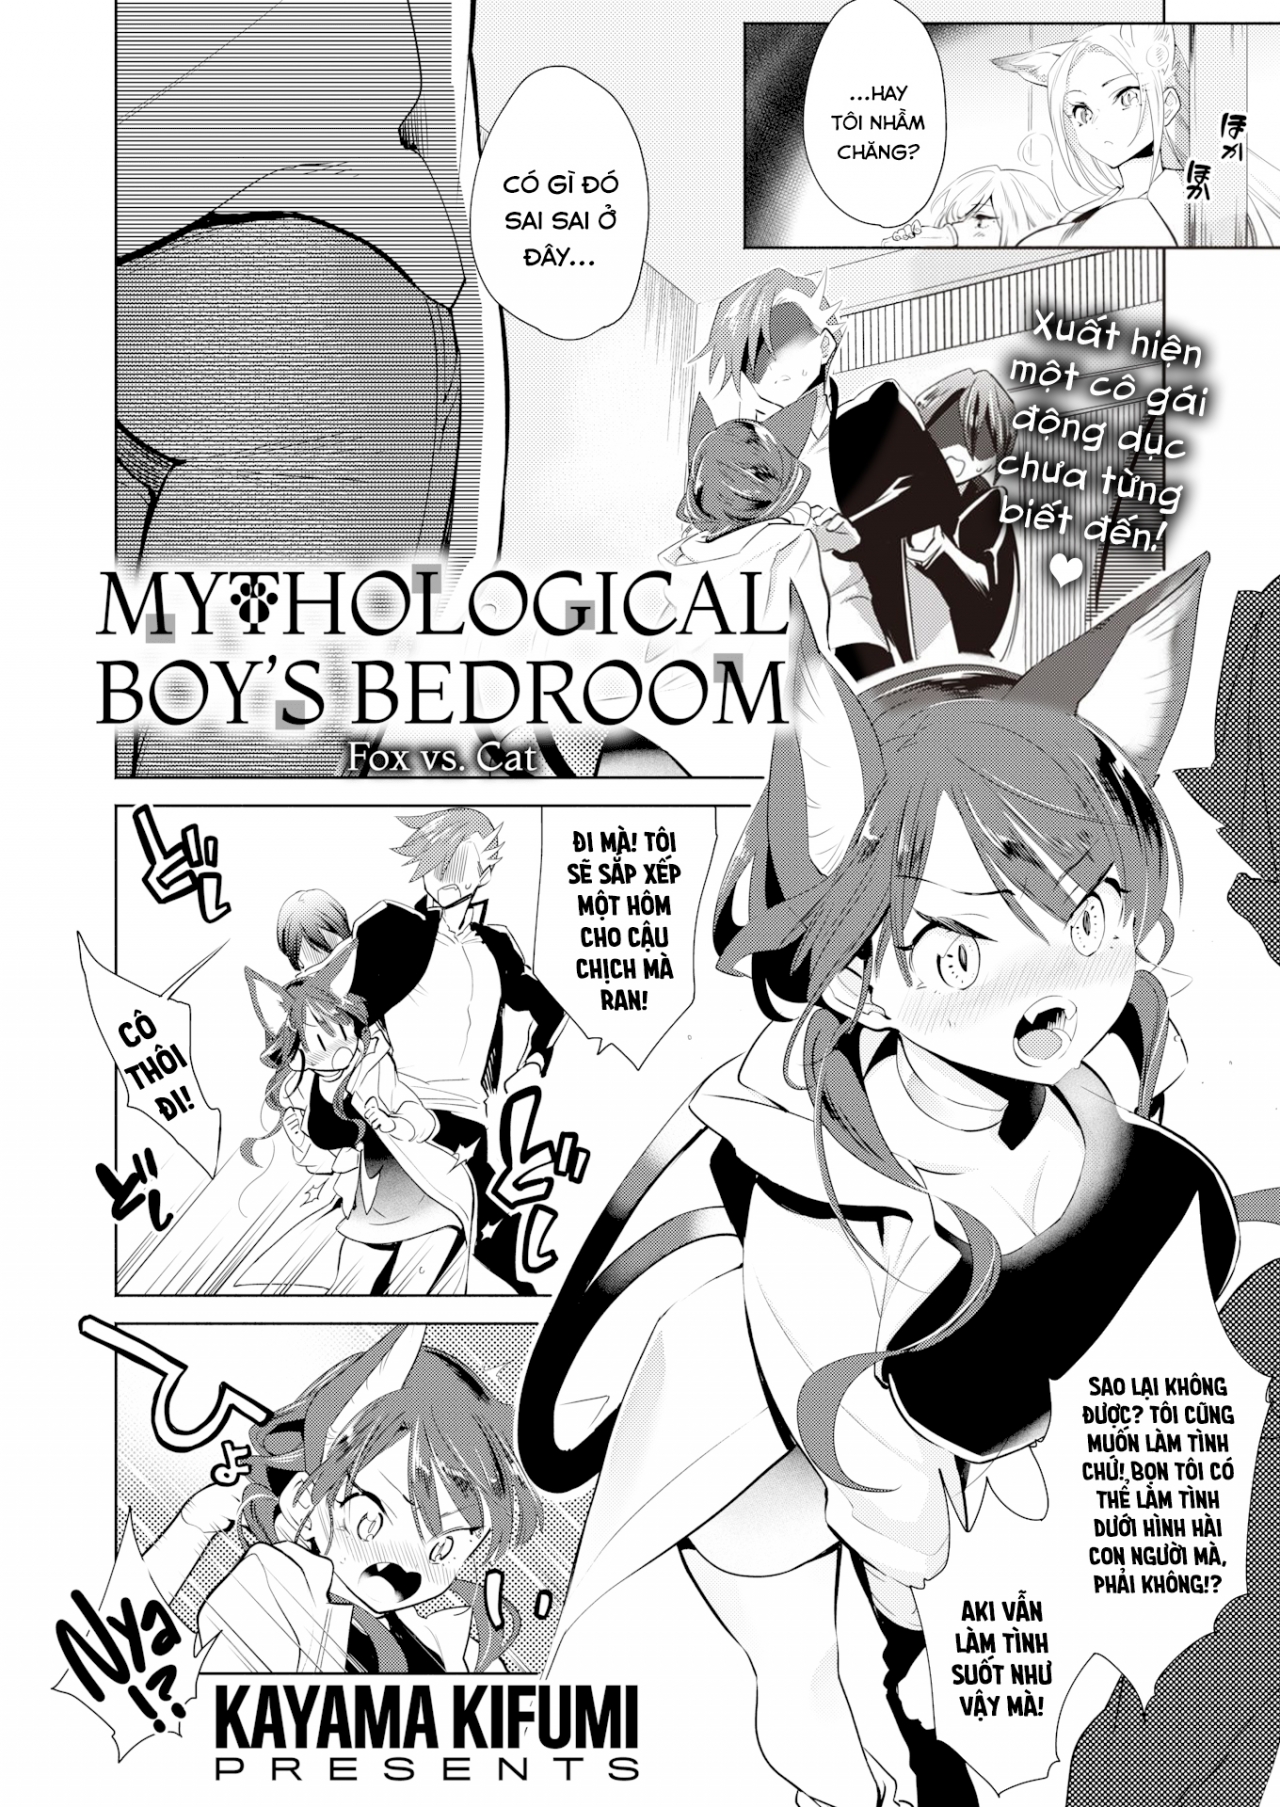 A Mythological Boy’s Bedroom